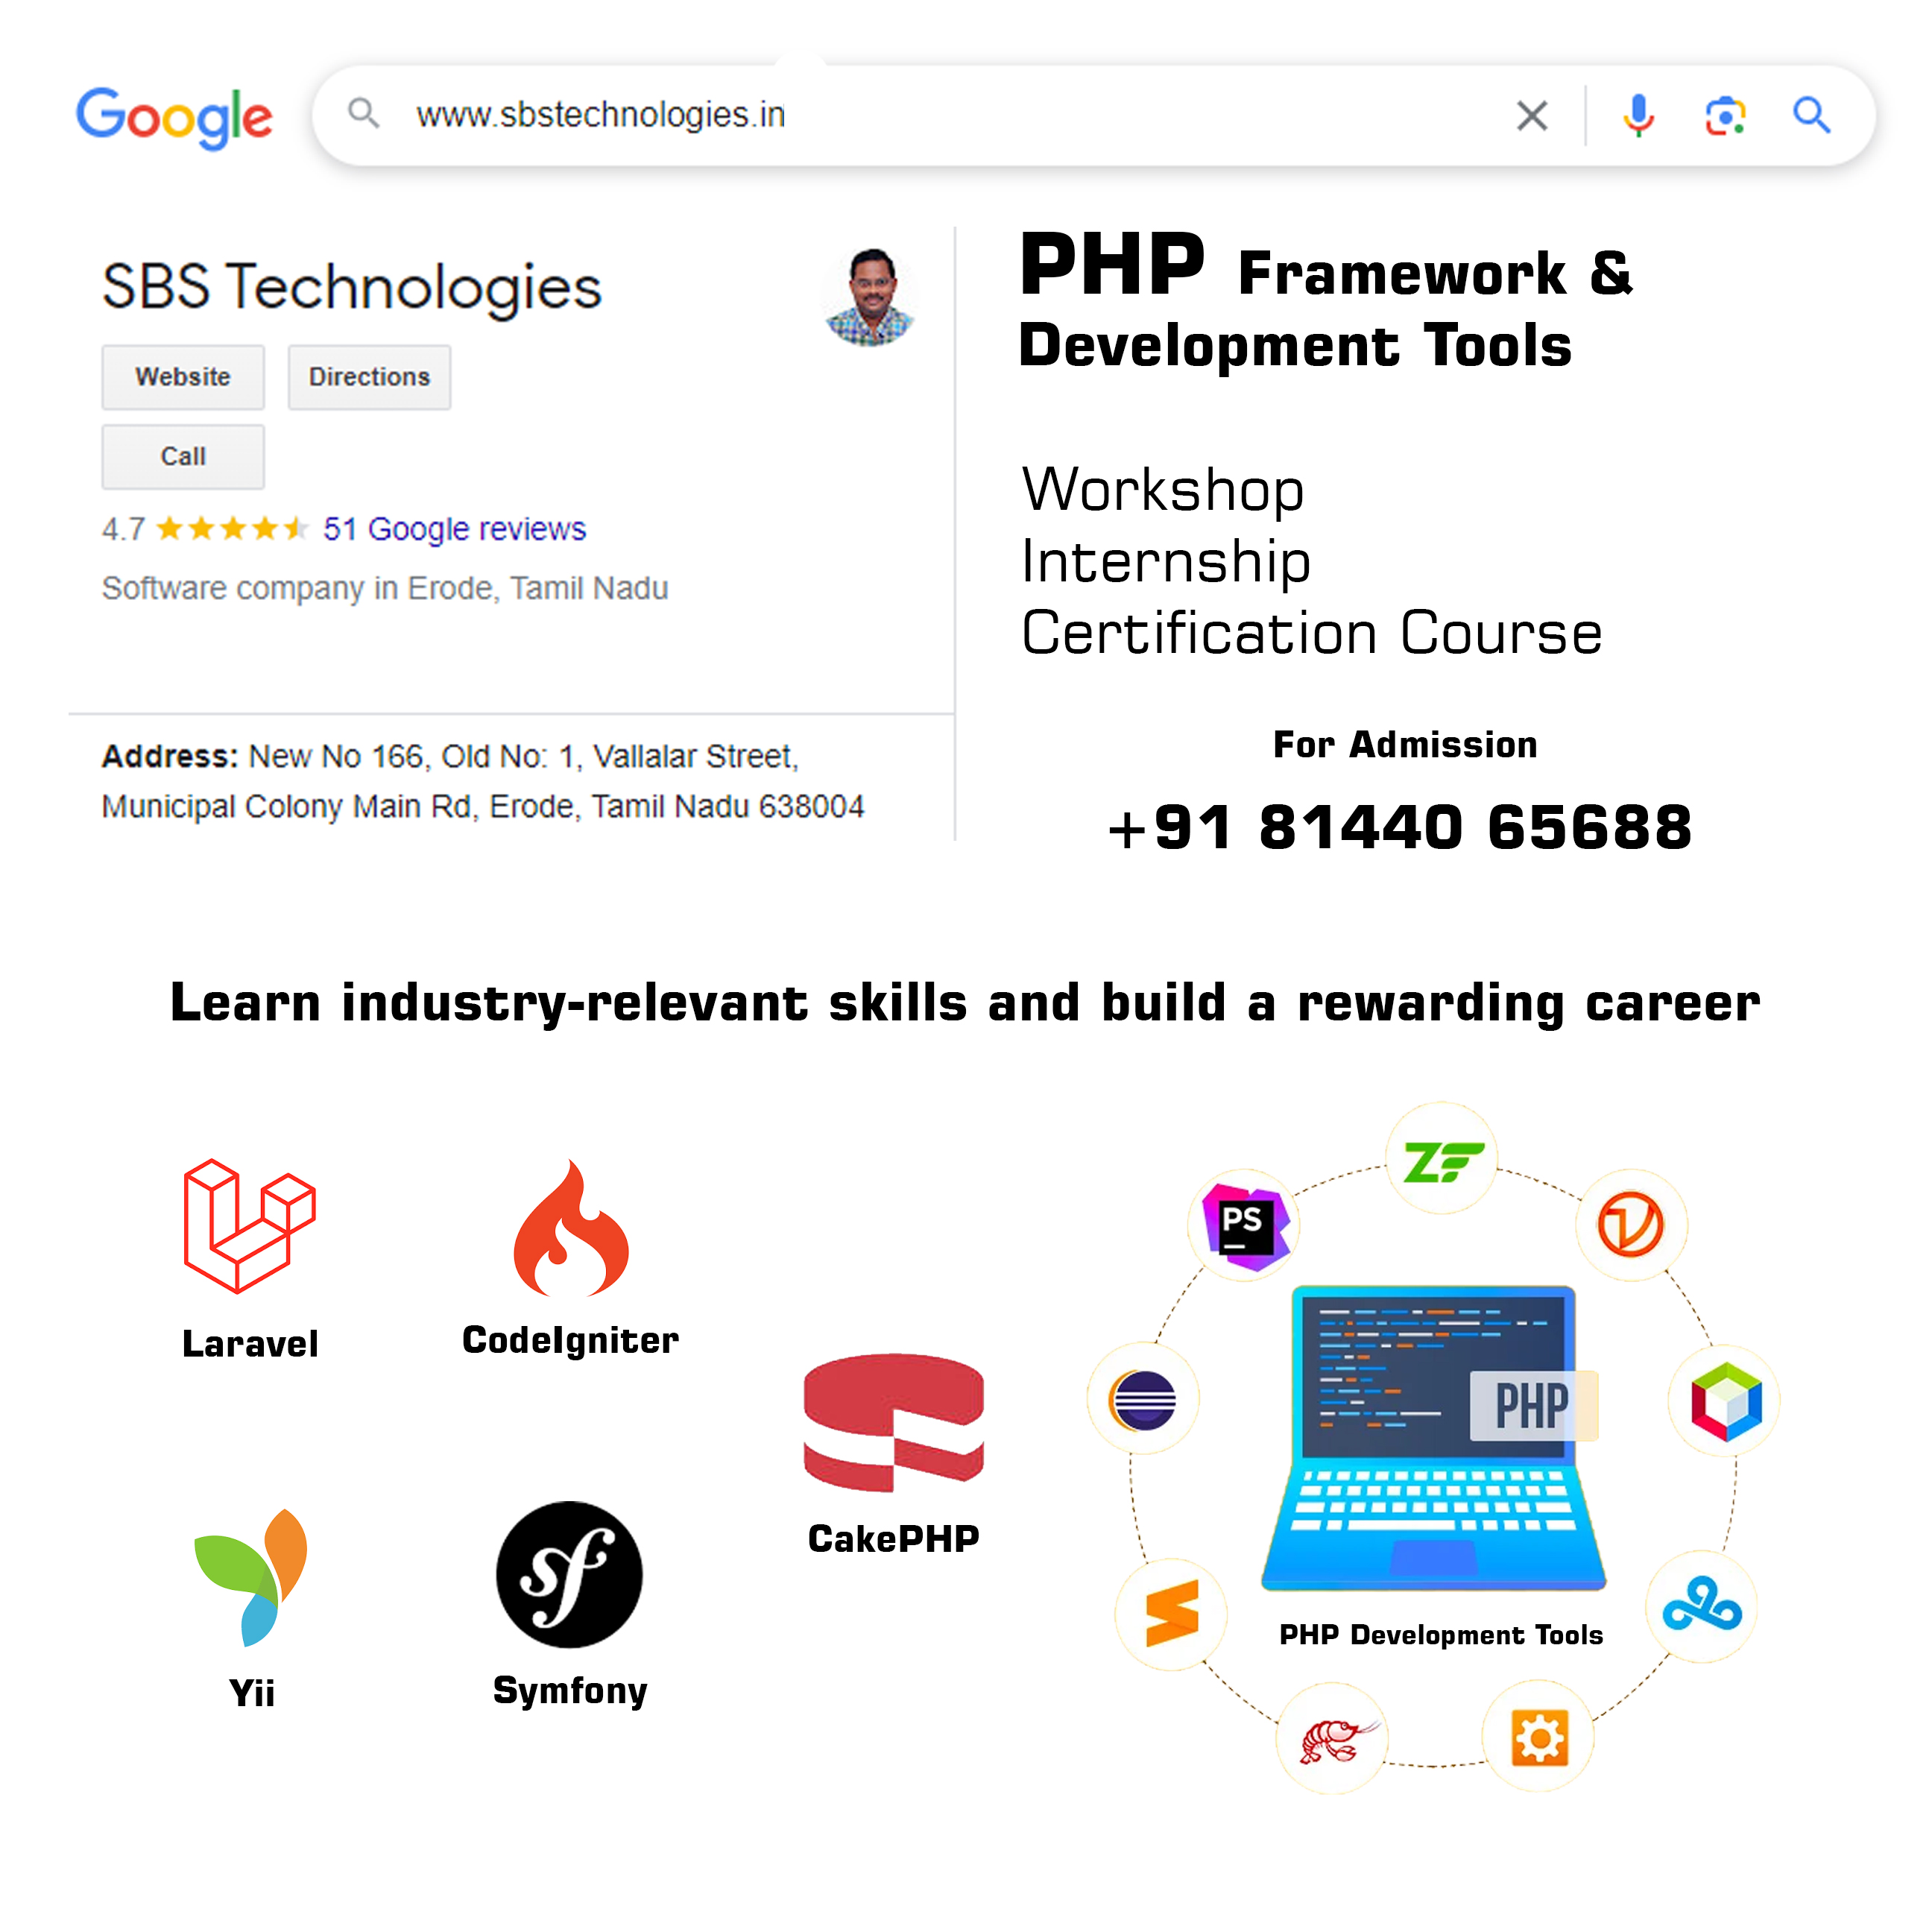 PHP Framework & Development Tools